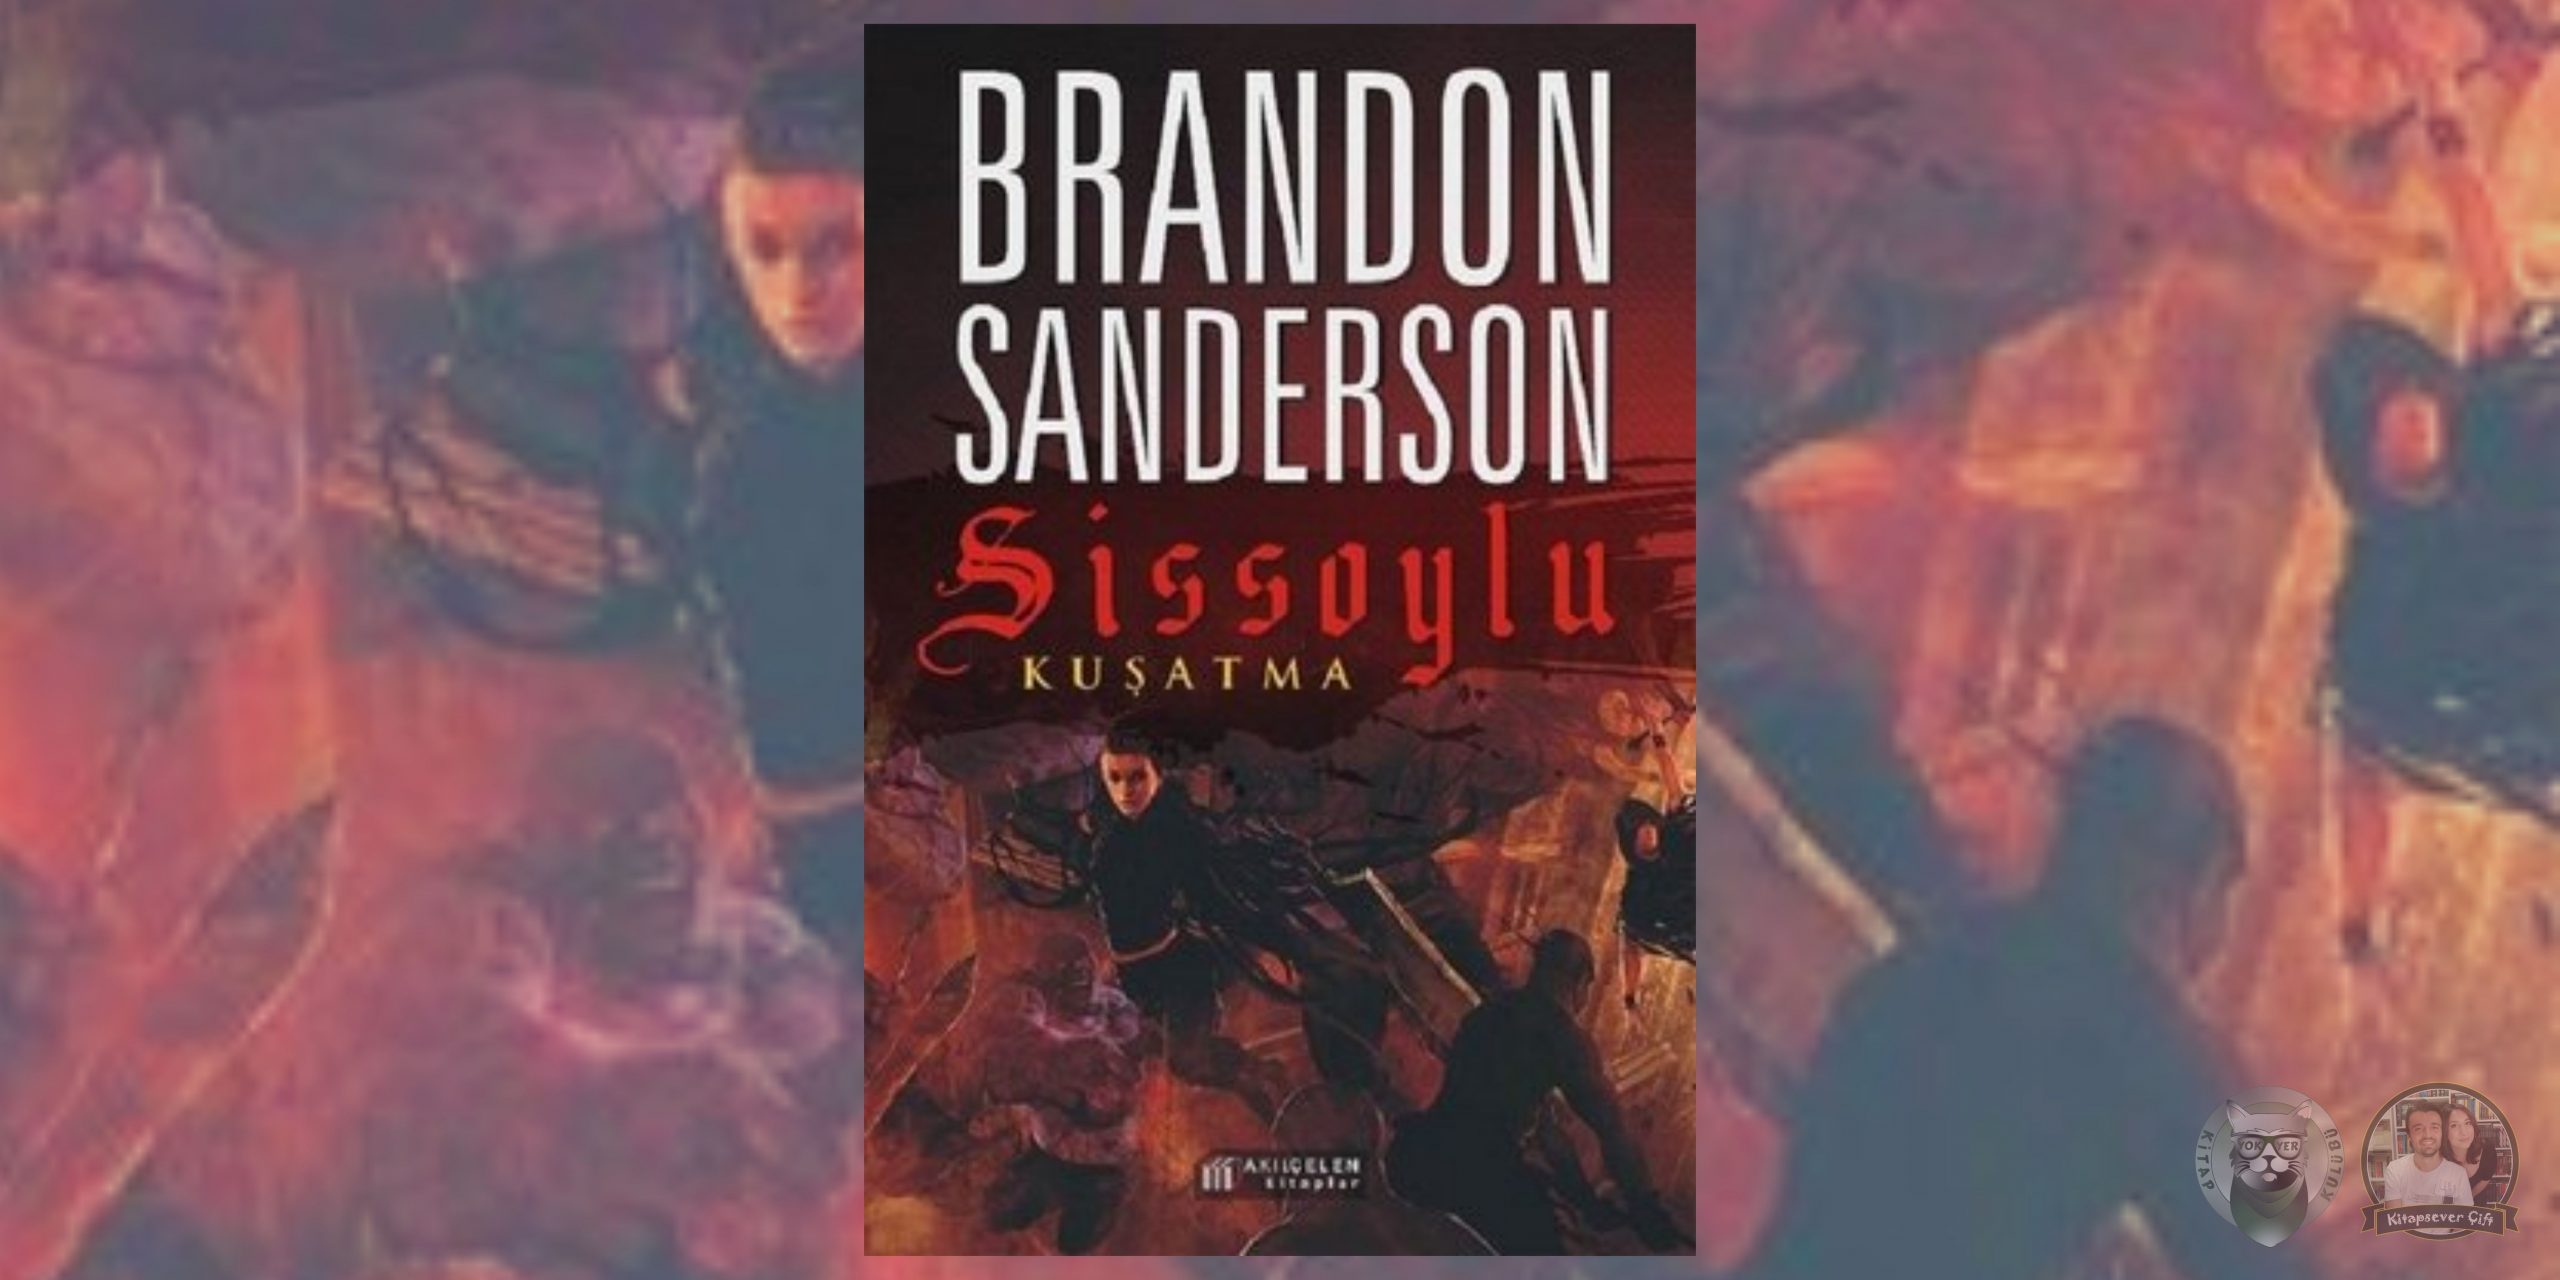 brandon sanderson - sissoylu serisi 2 – sissoylu 2 kusatma scaled